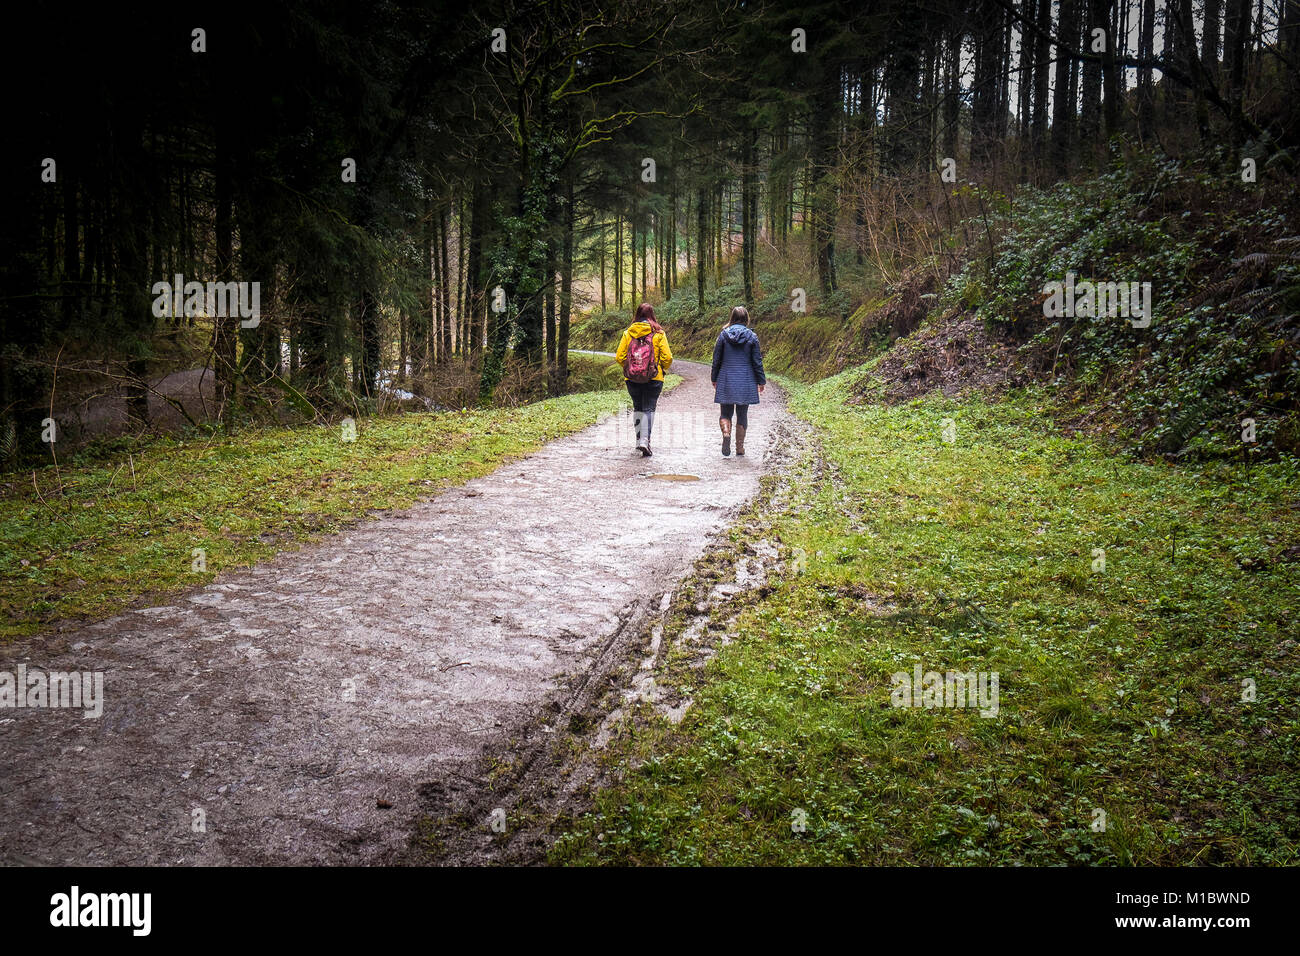 Cardinham Woods in Cornwall - two people walking along a track in Cardinham Woods in Bodmin Cornwall. Stock Photo